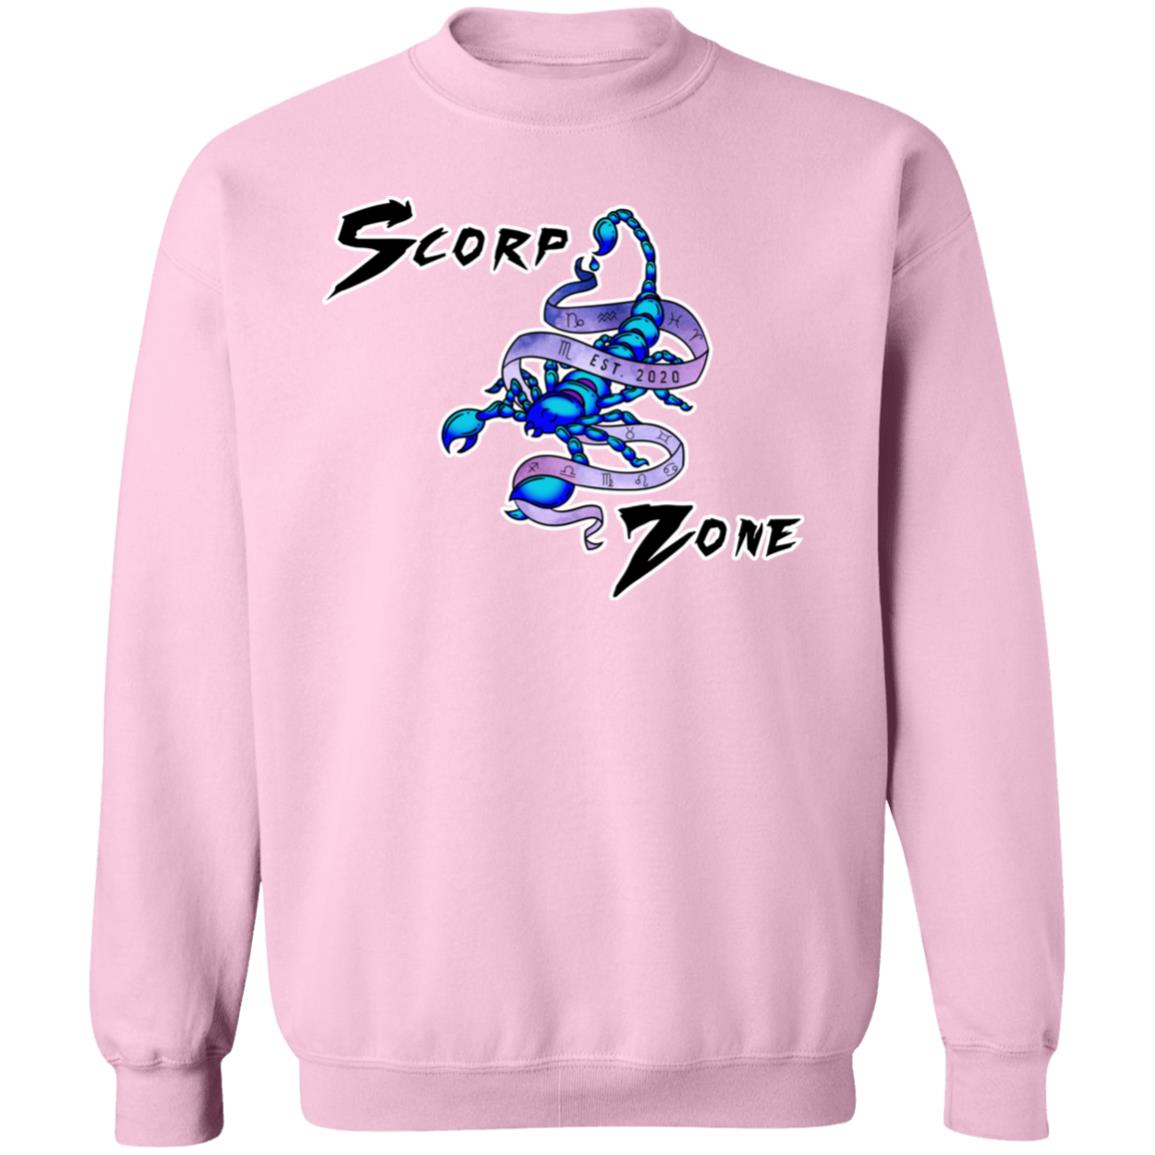 Crewneck Pullover Sweatshirt - Large Scorp Zone Logo On Front